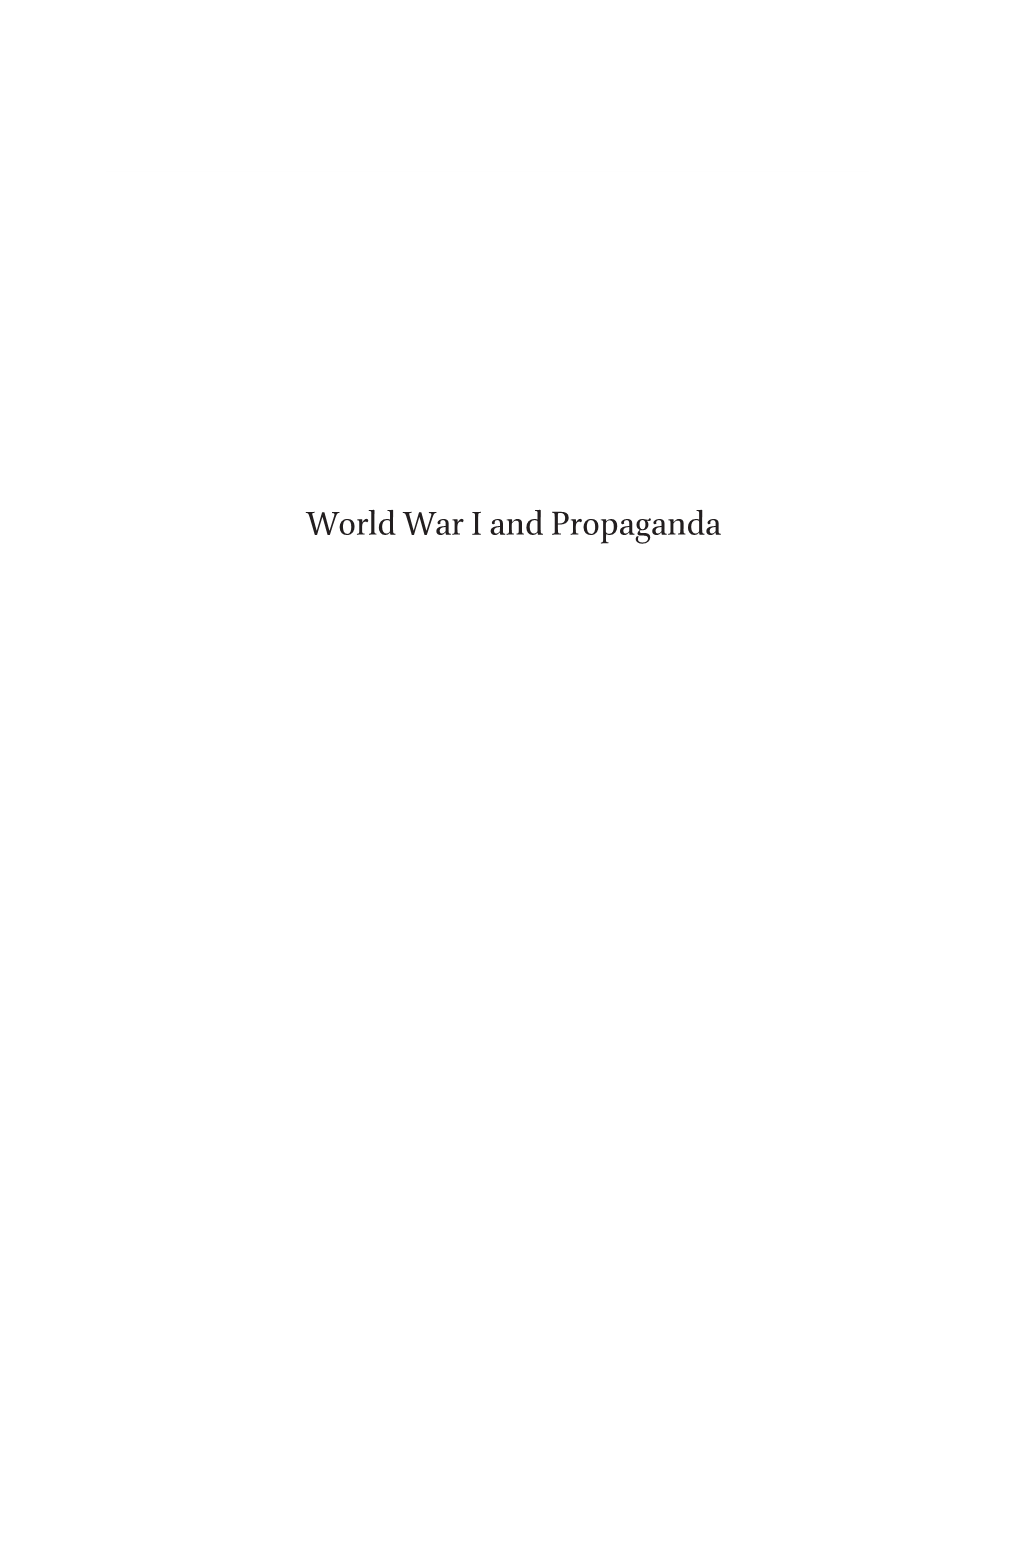 World War I and Propaganda Ii Contents History of Warfare